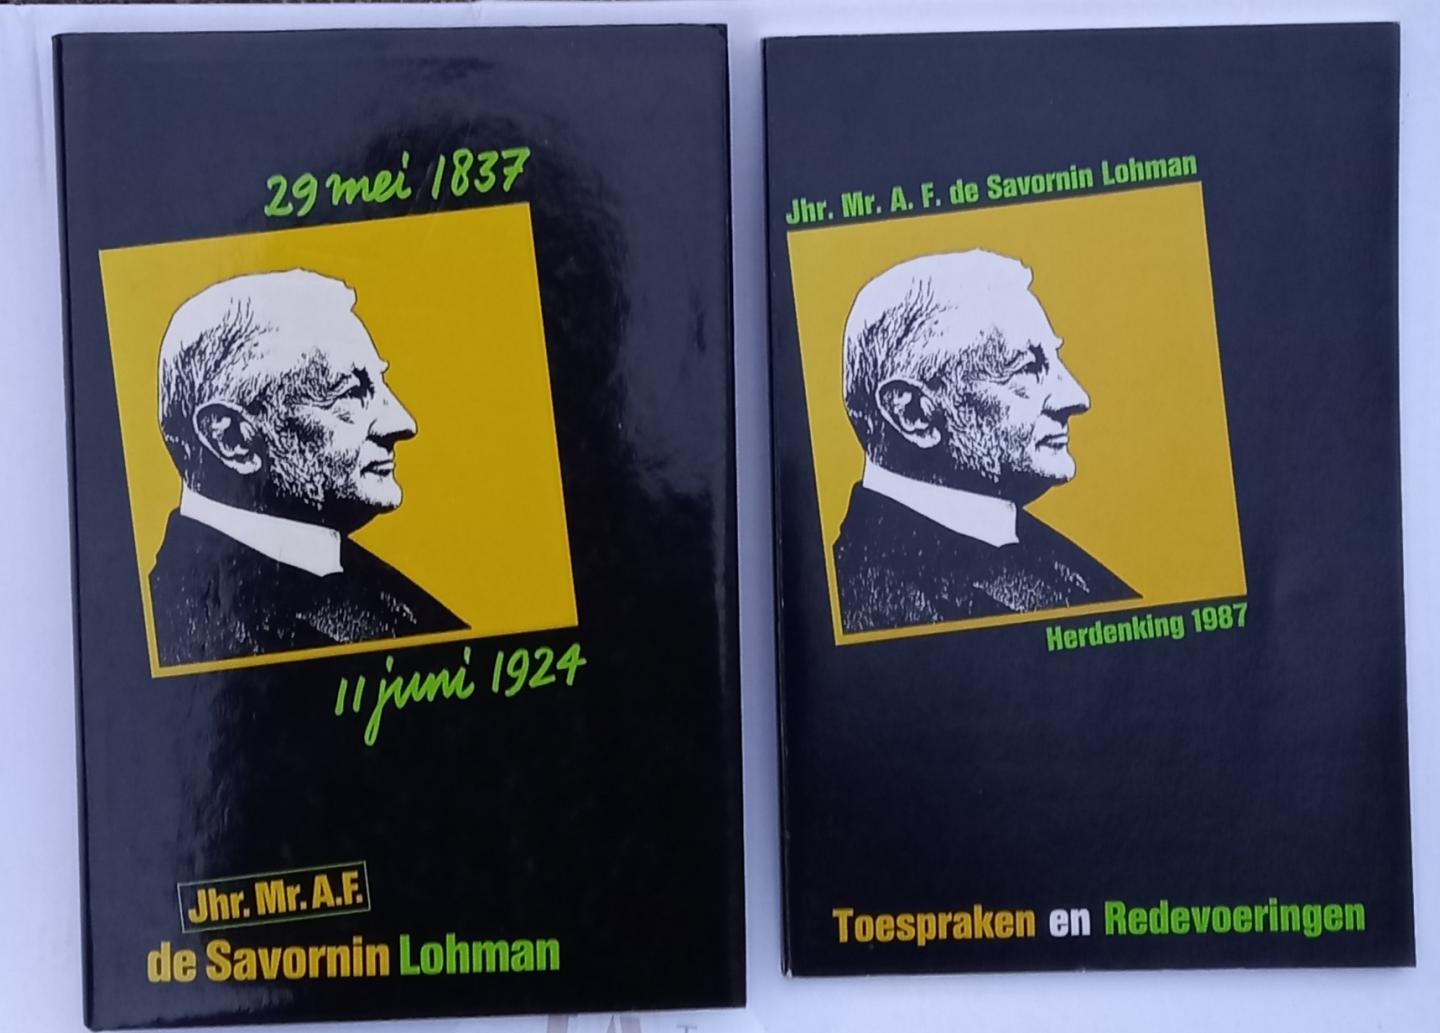 Gaay Fortman, Mr. W.F. de / Verheul, Dr. H. (red.) - 2 titels: 1 Jhr.mr. A.F. de Savornin Lohman (29 mei 1837 - 11 juni 1924. Een bundel opstellen) + 2 Toespraken en Redevoeringen (Herdenking 1987).